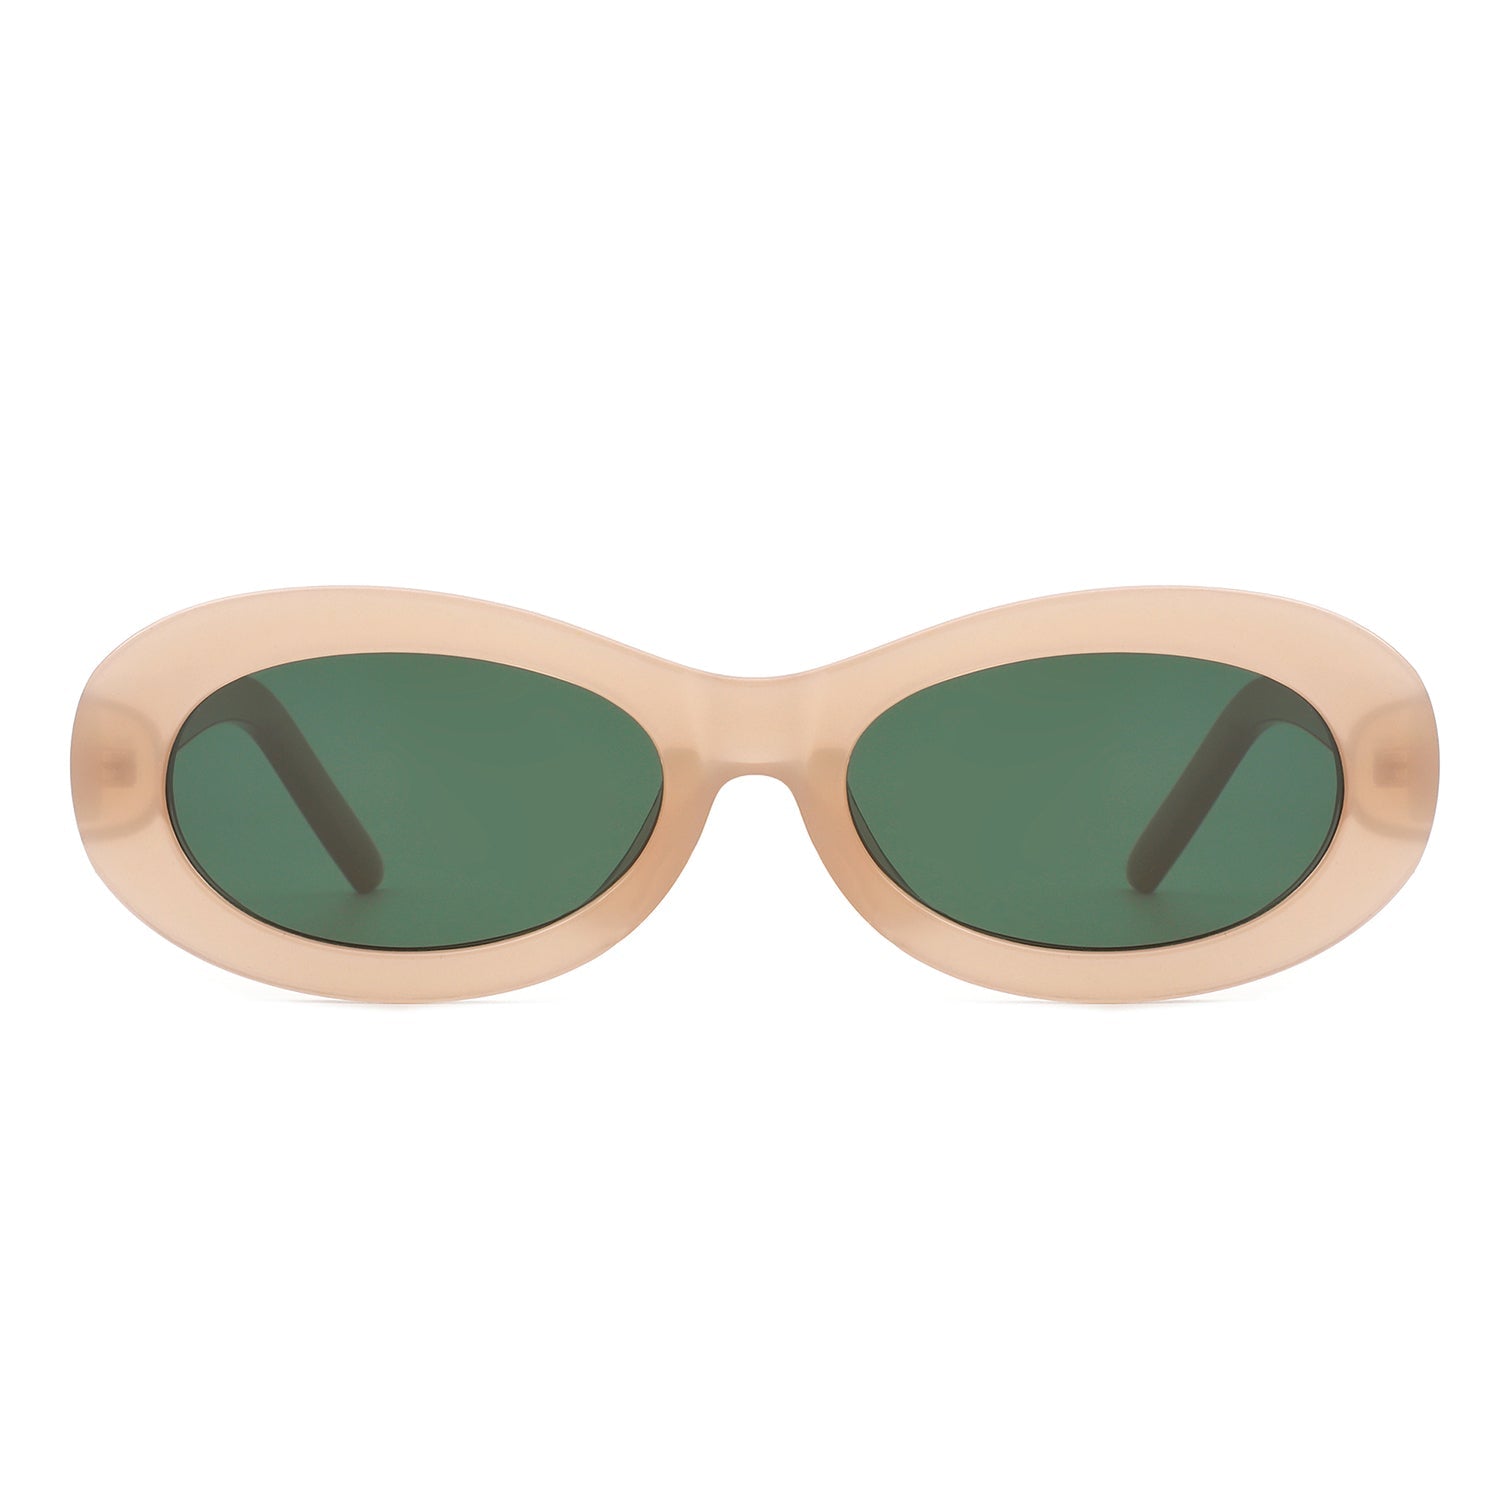 90's oval sunglasses